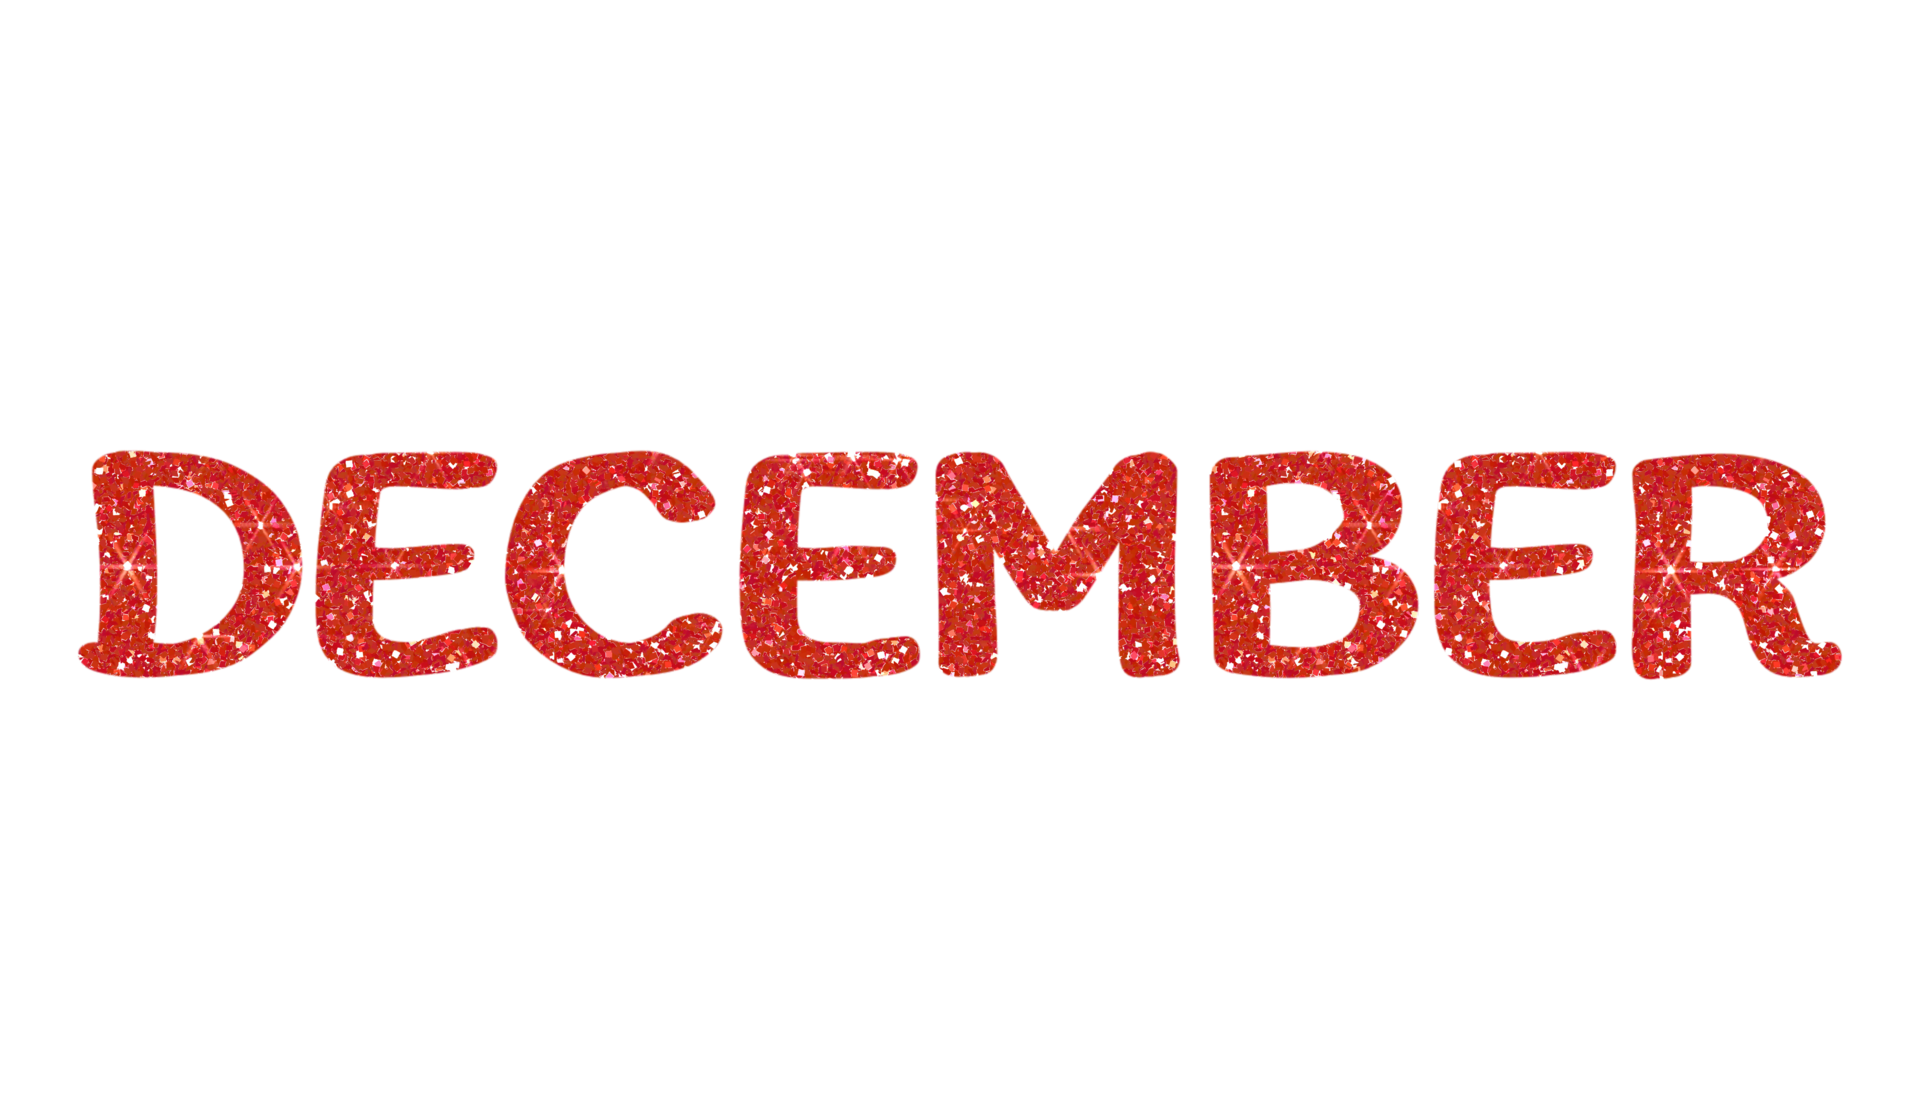 Red glitter DECEMBER Letters Icon. December sign. Design for decorating ...